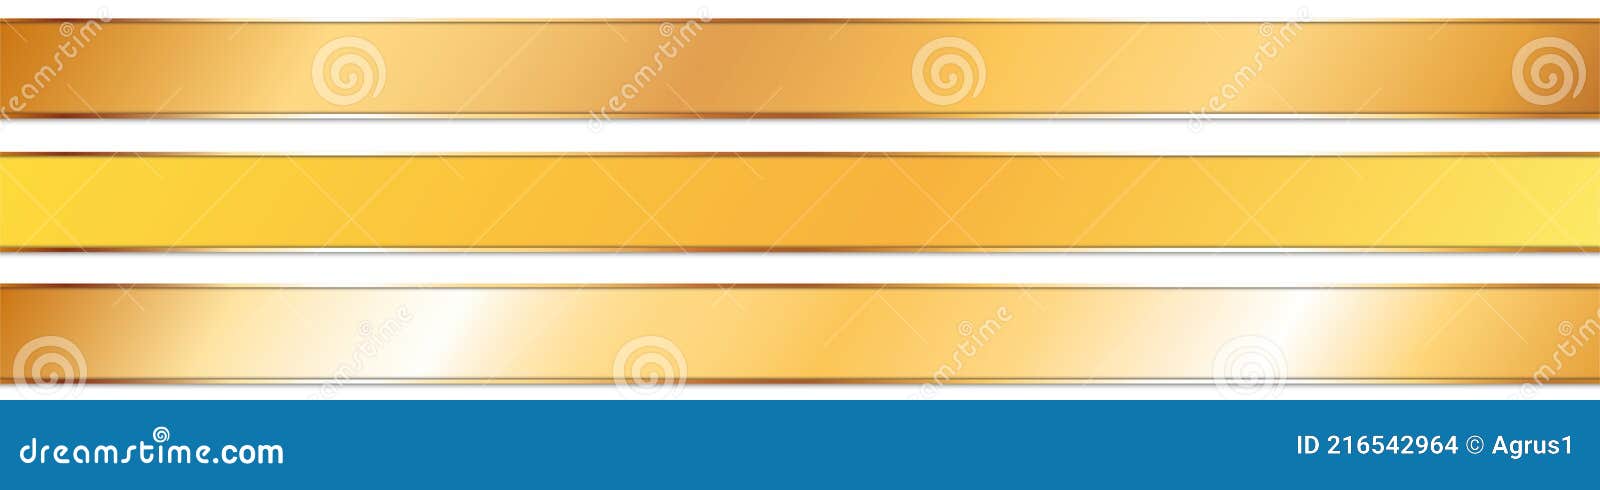 Conjunto de banners de cinta dorada